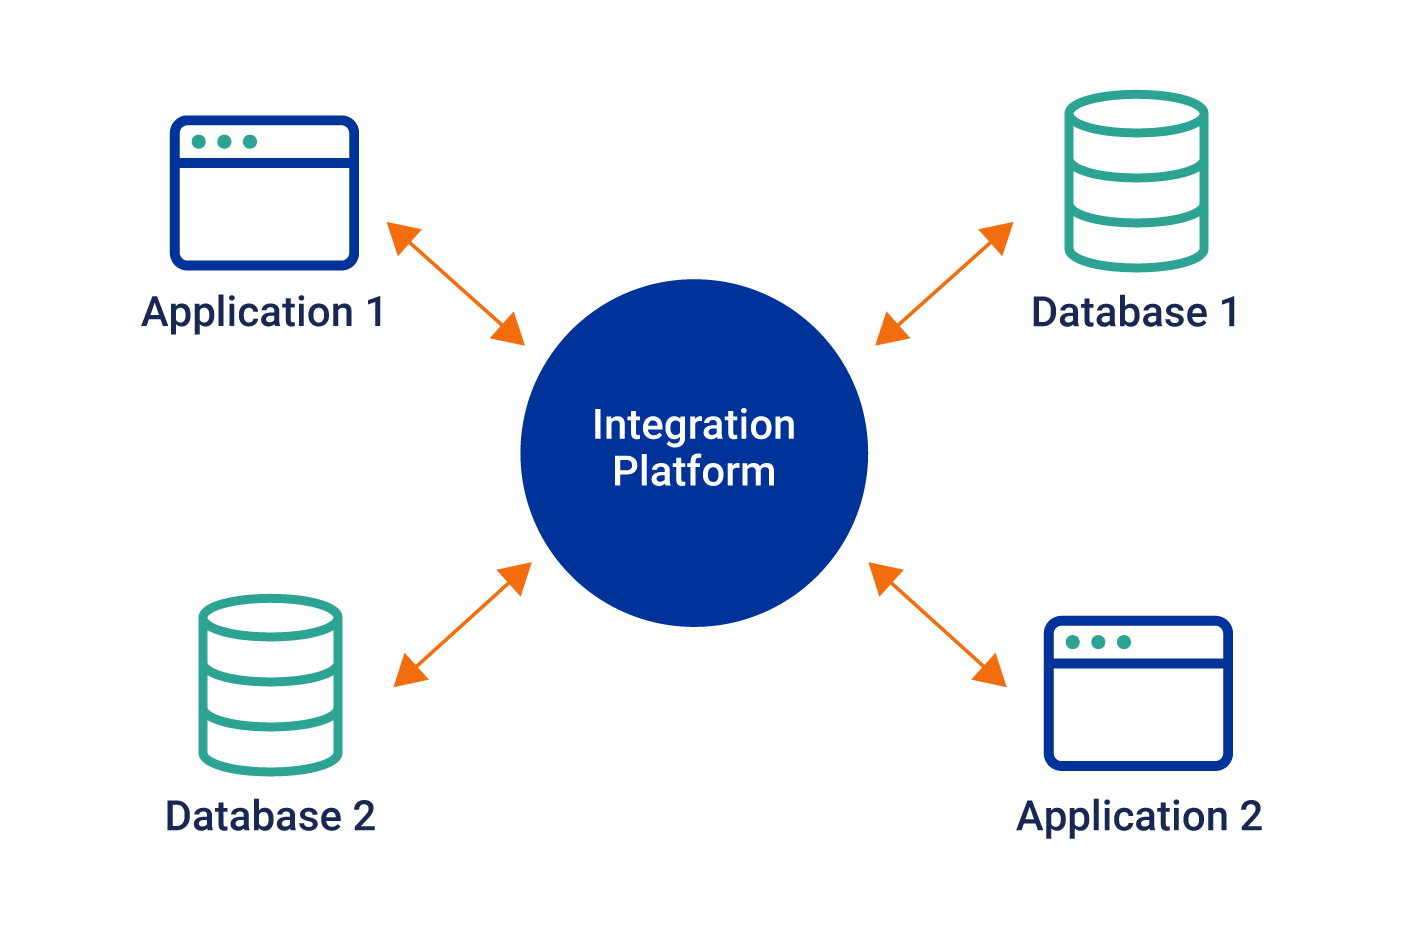 Platform Integration